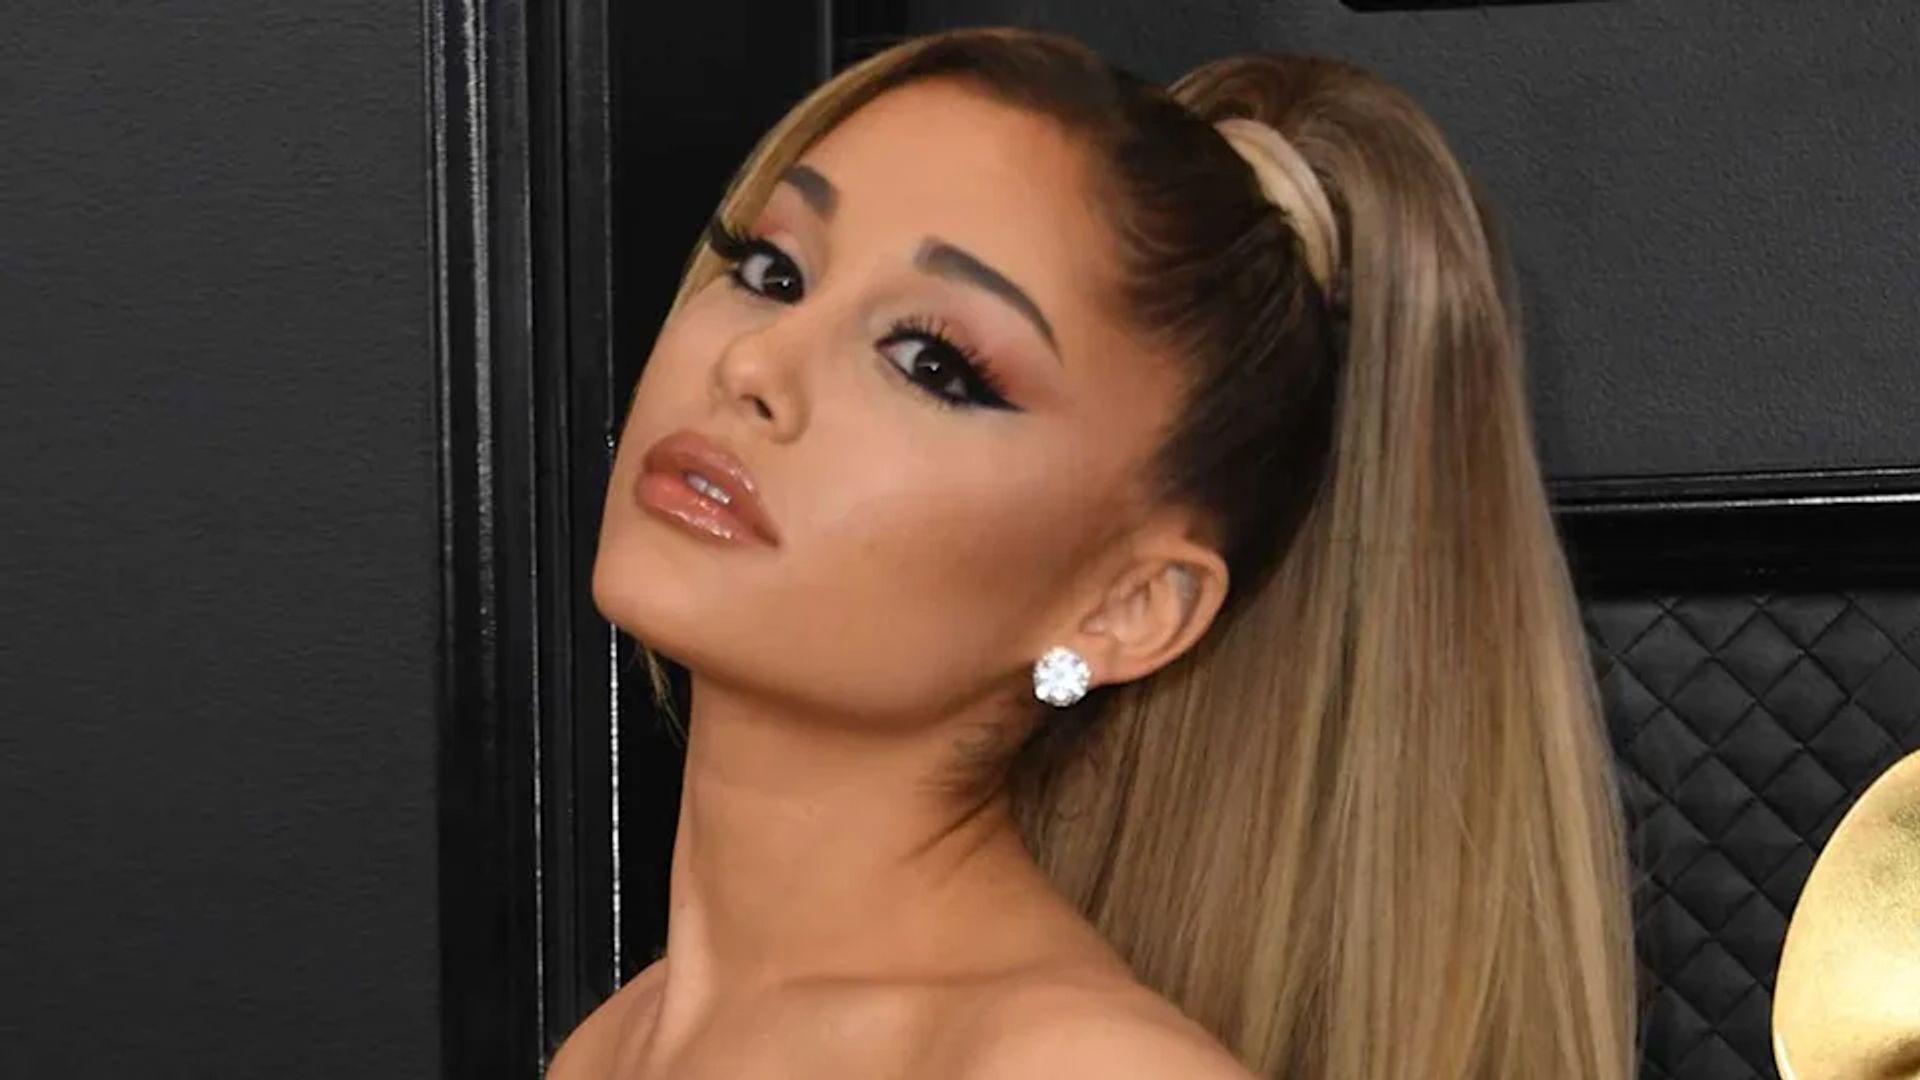 Ariana Grande's call for kindness: singer addresses body shamers in vulnerable video